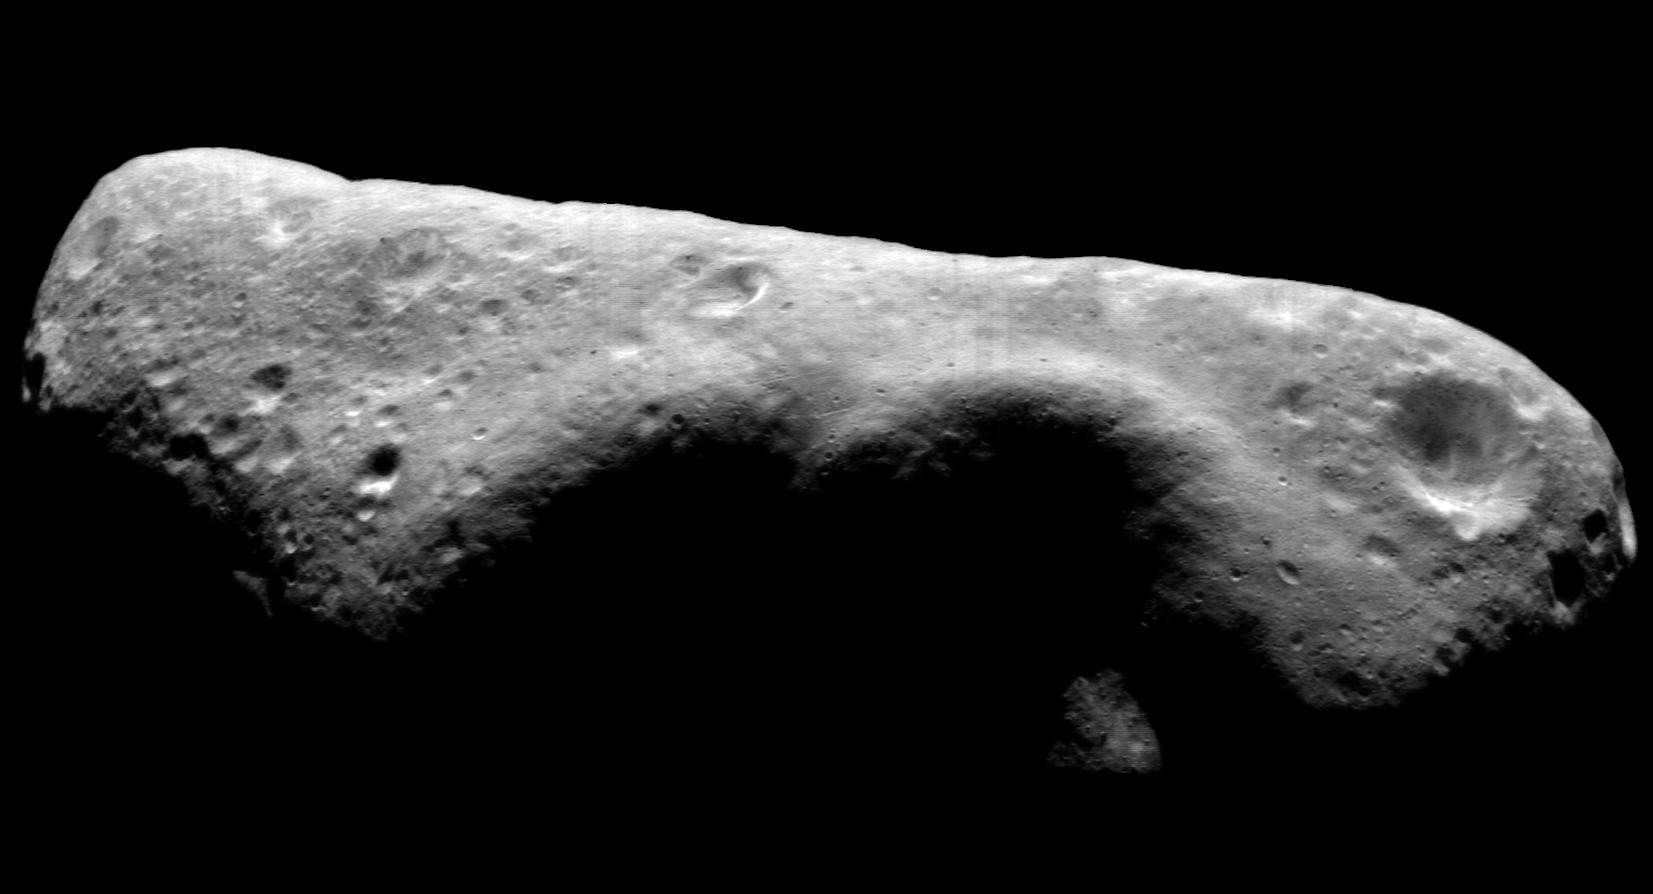 Black and white photo of asteroid Eros